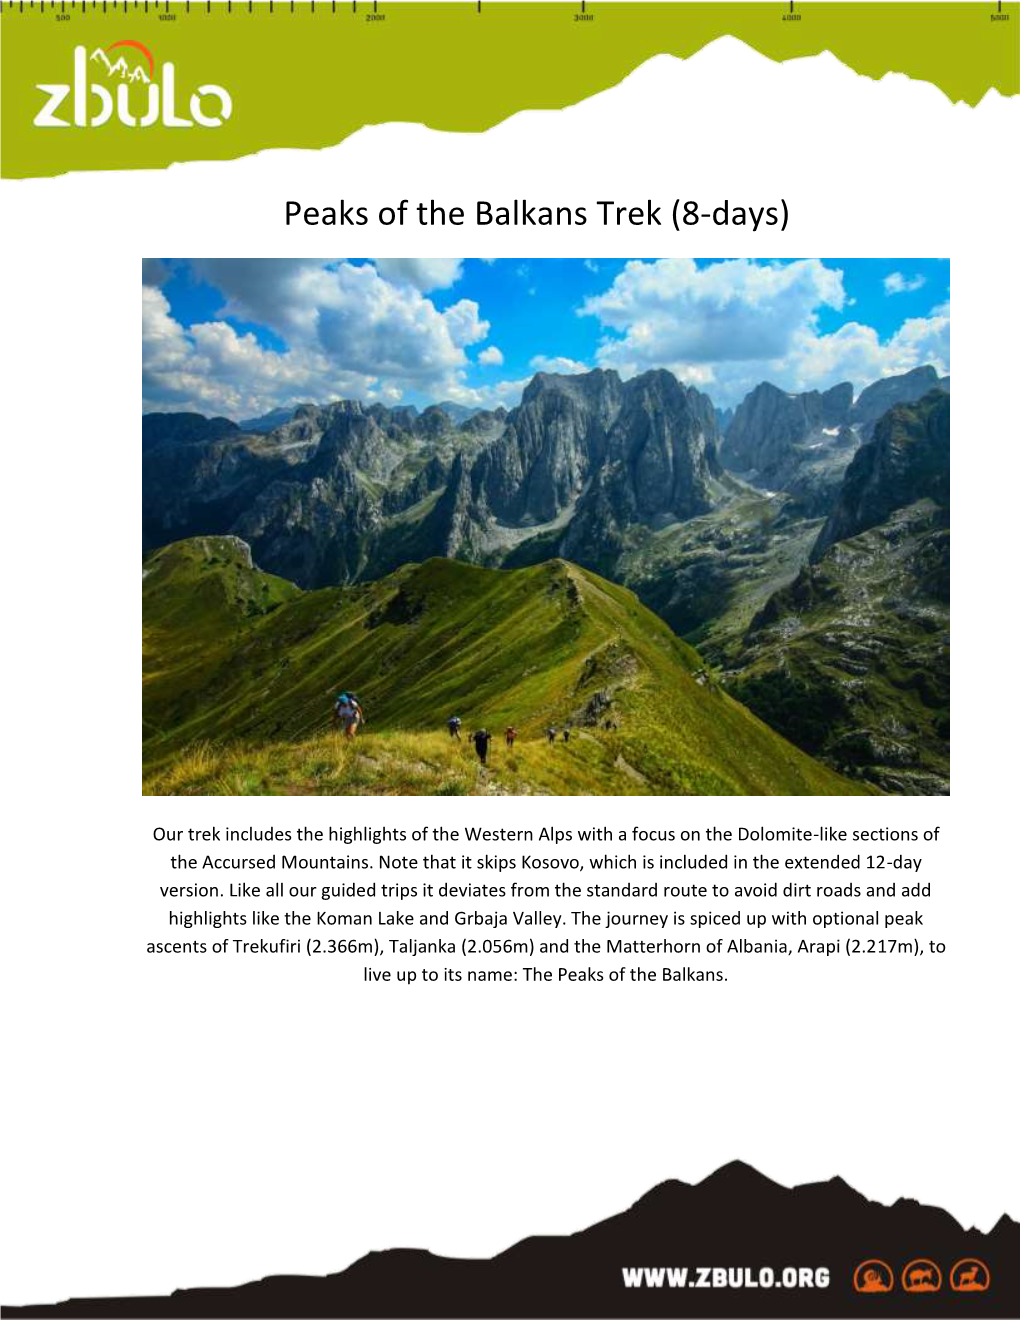 Peaks of the Balkans Trek (8-Days)